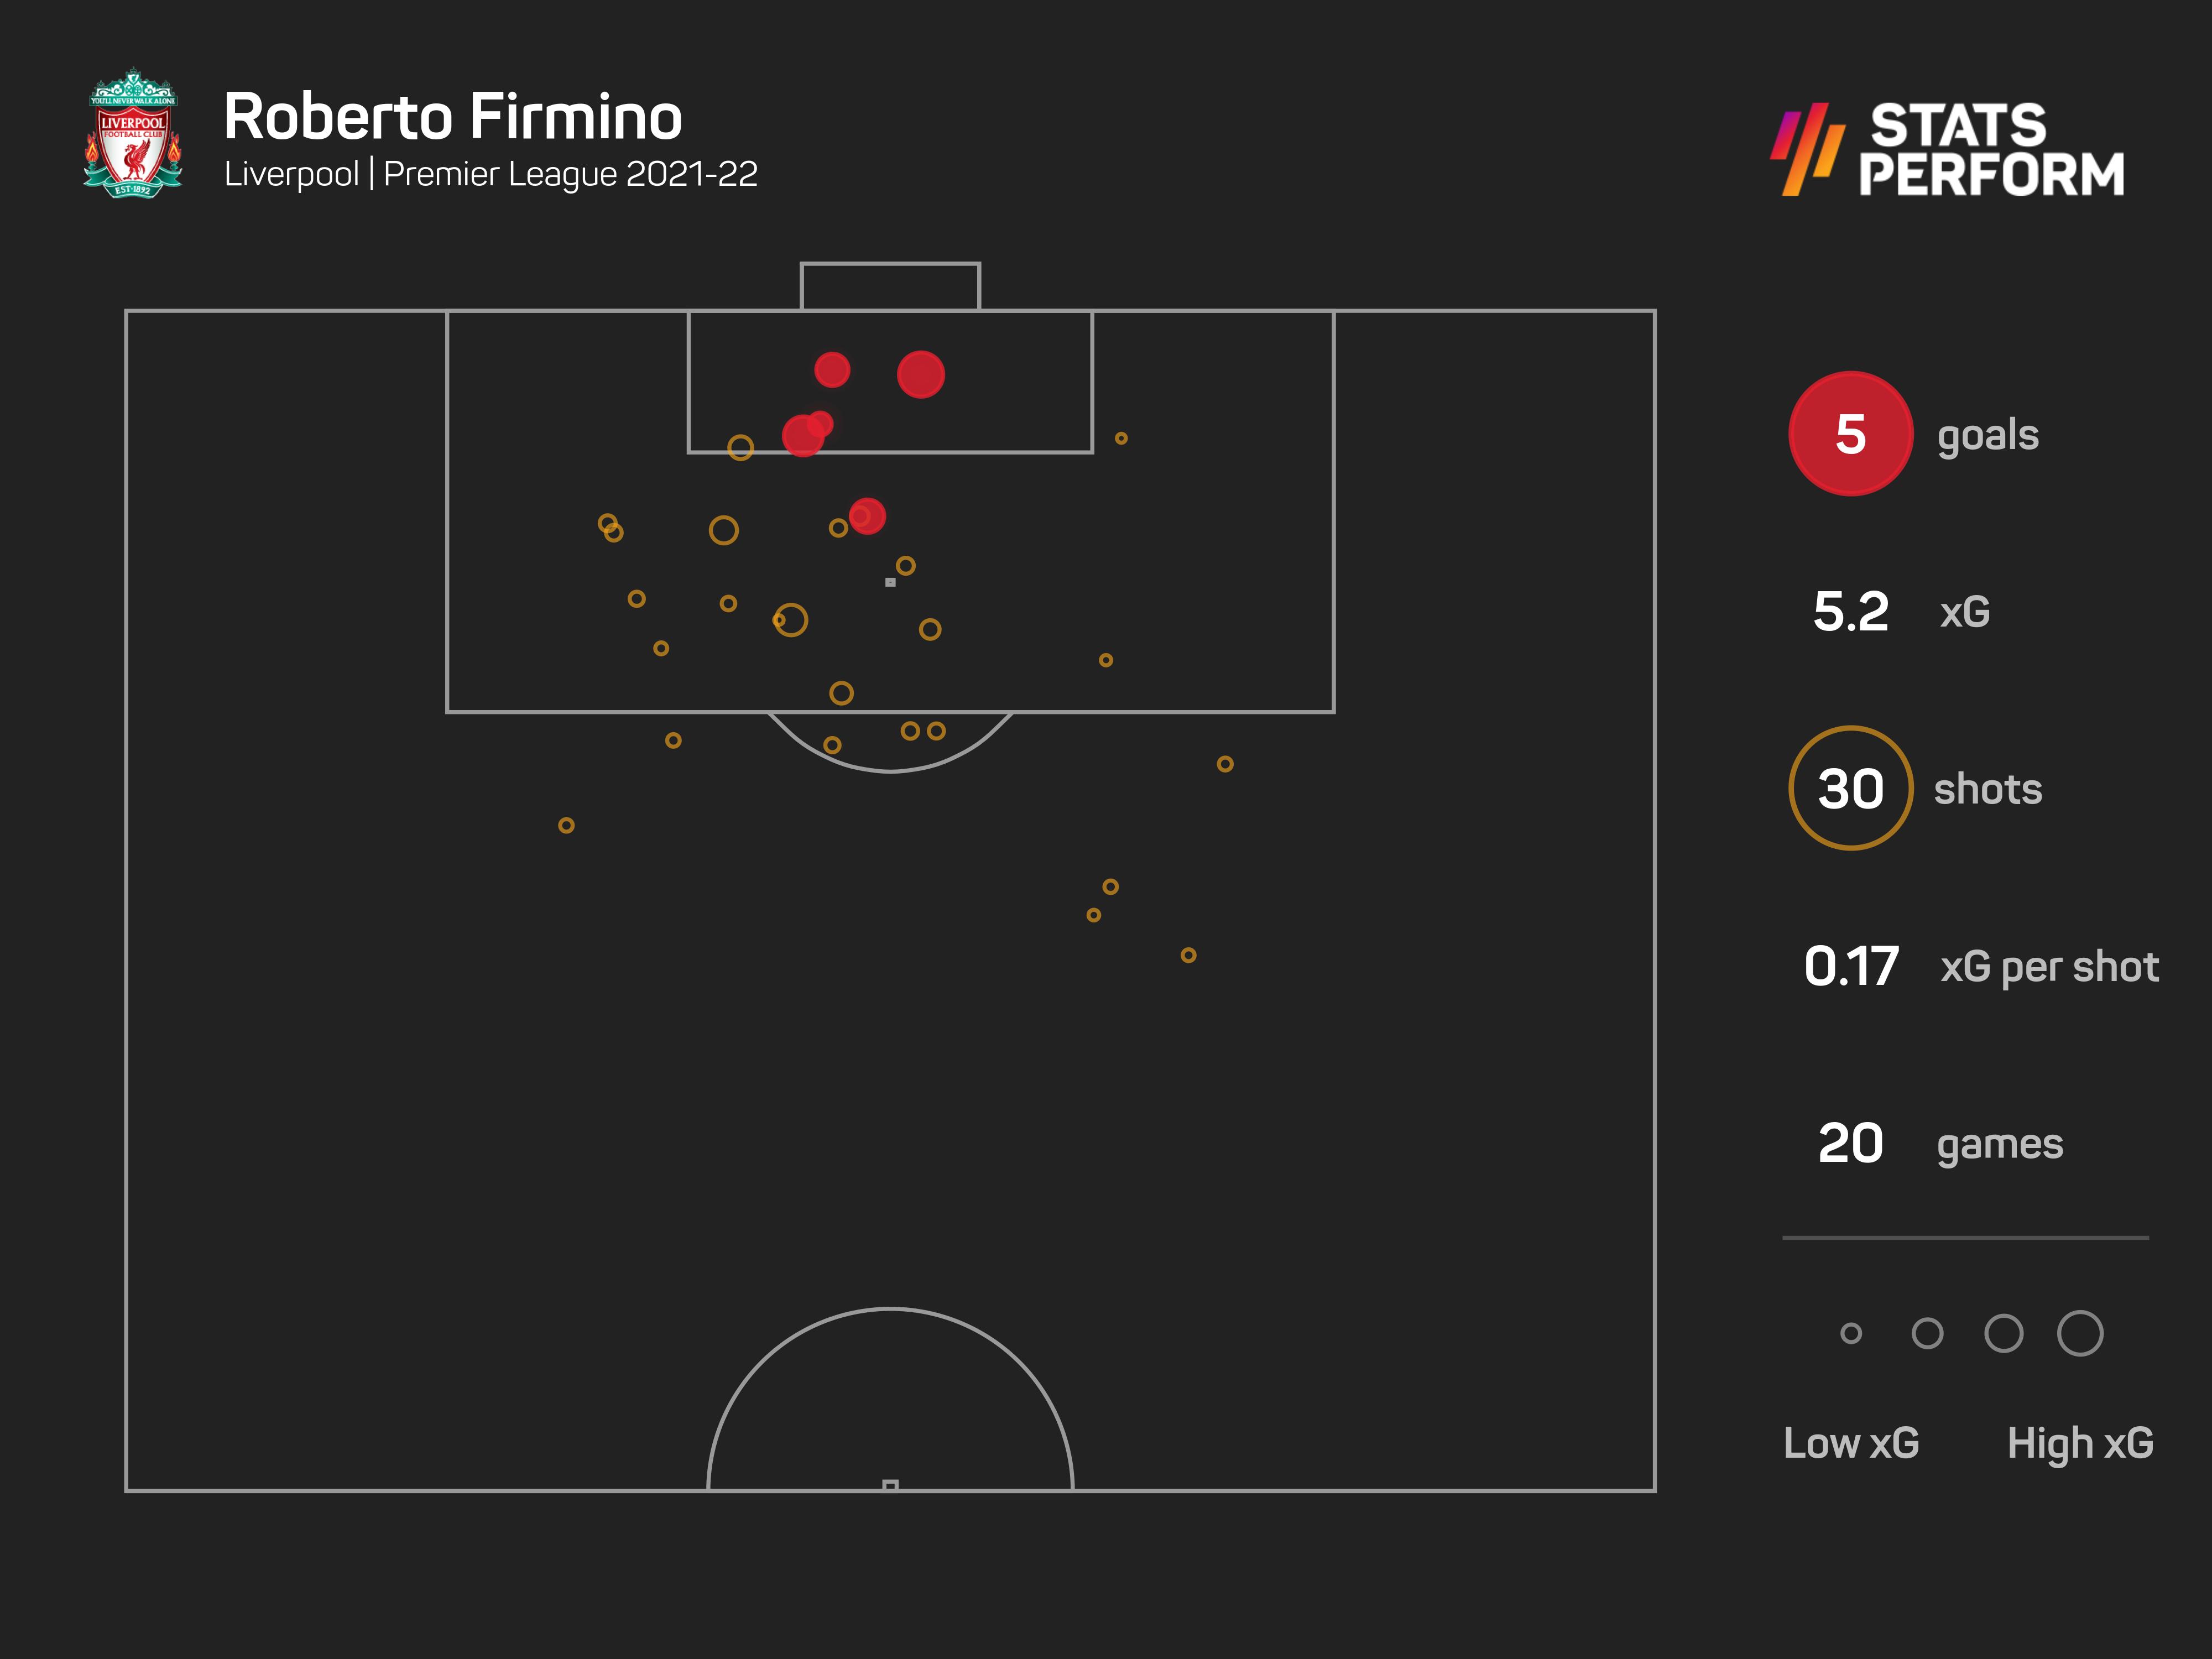 Roberto Firmino scored five league goals last season